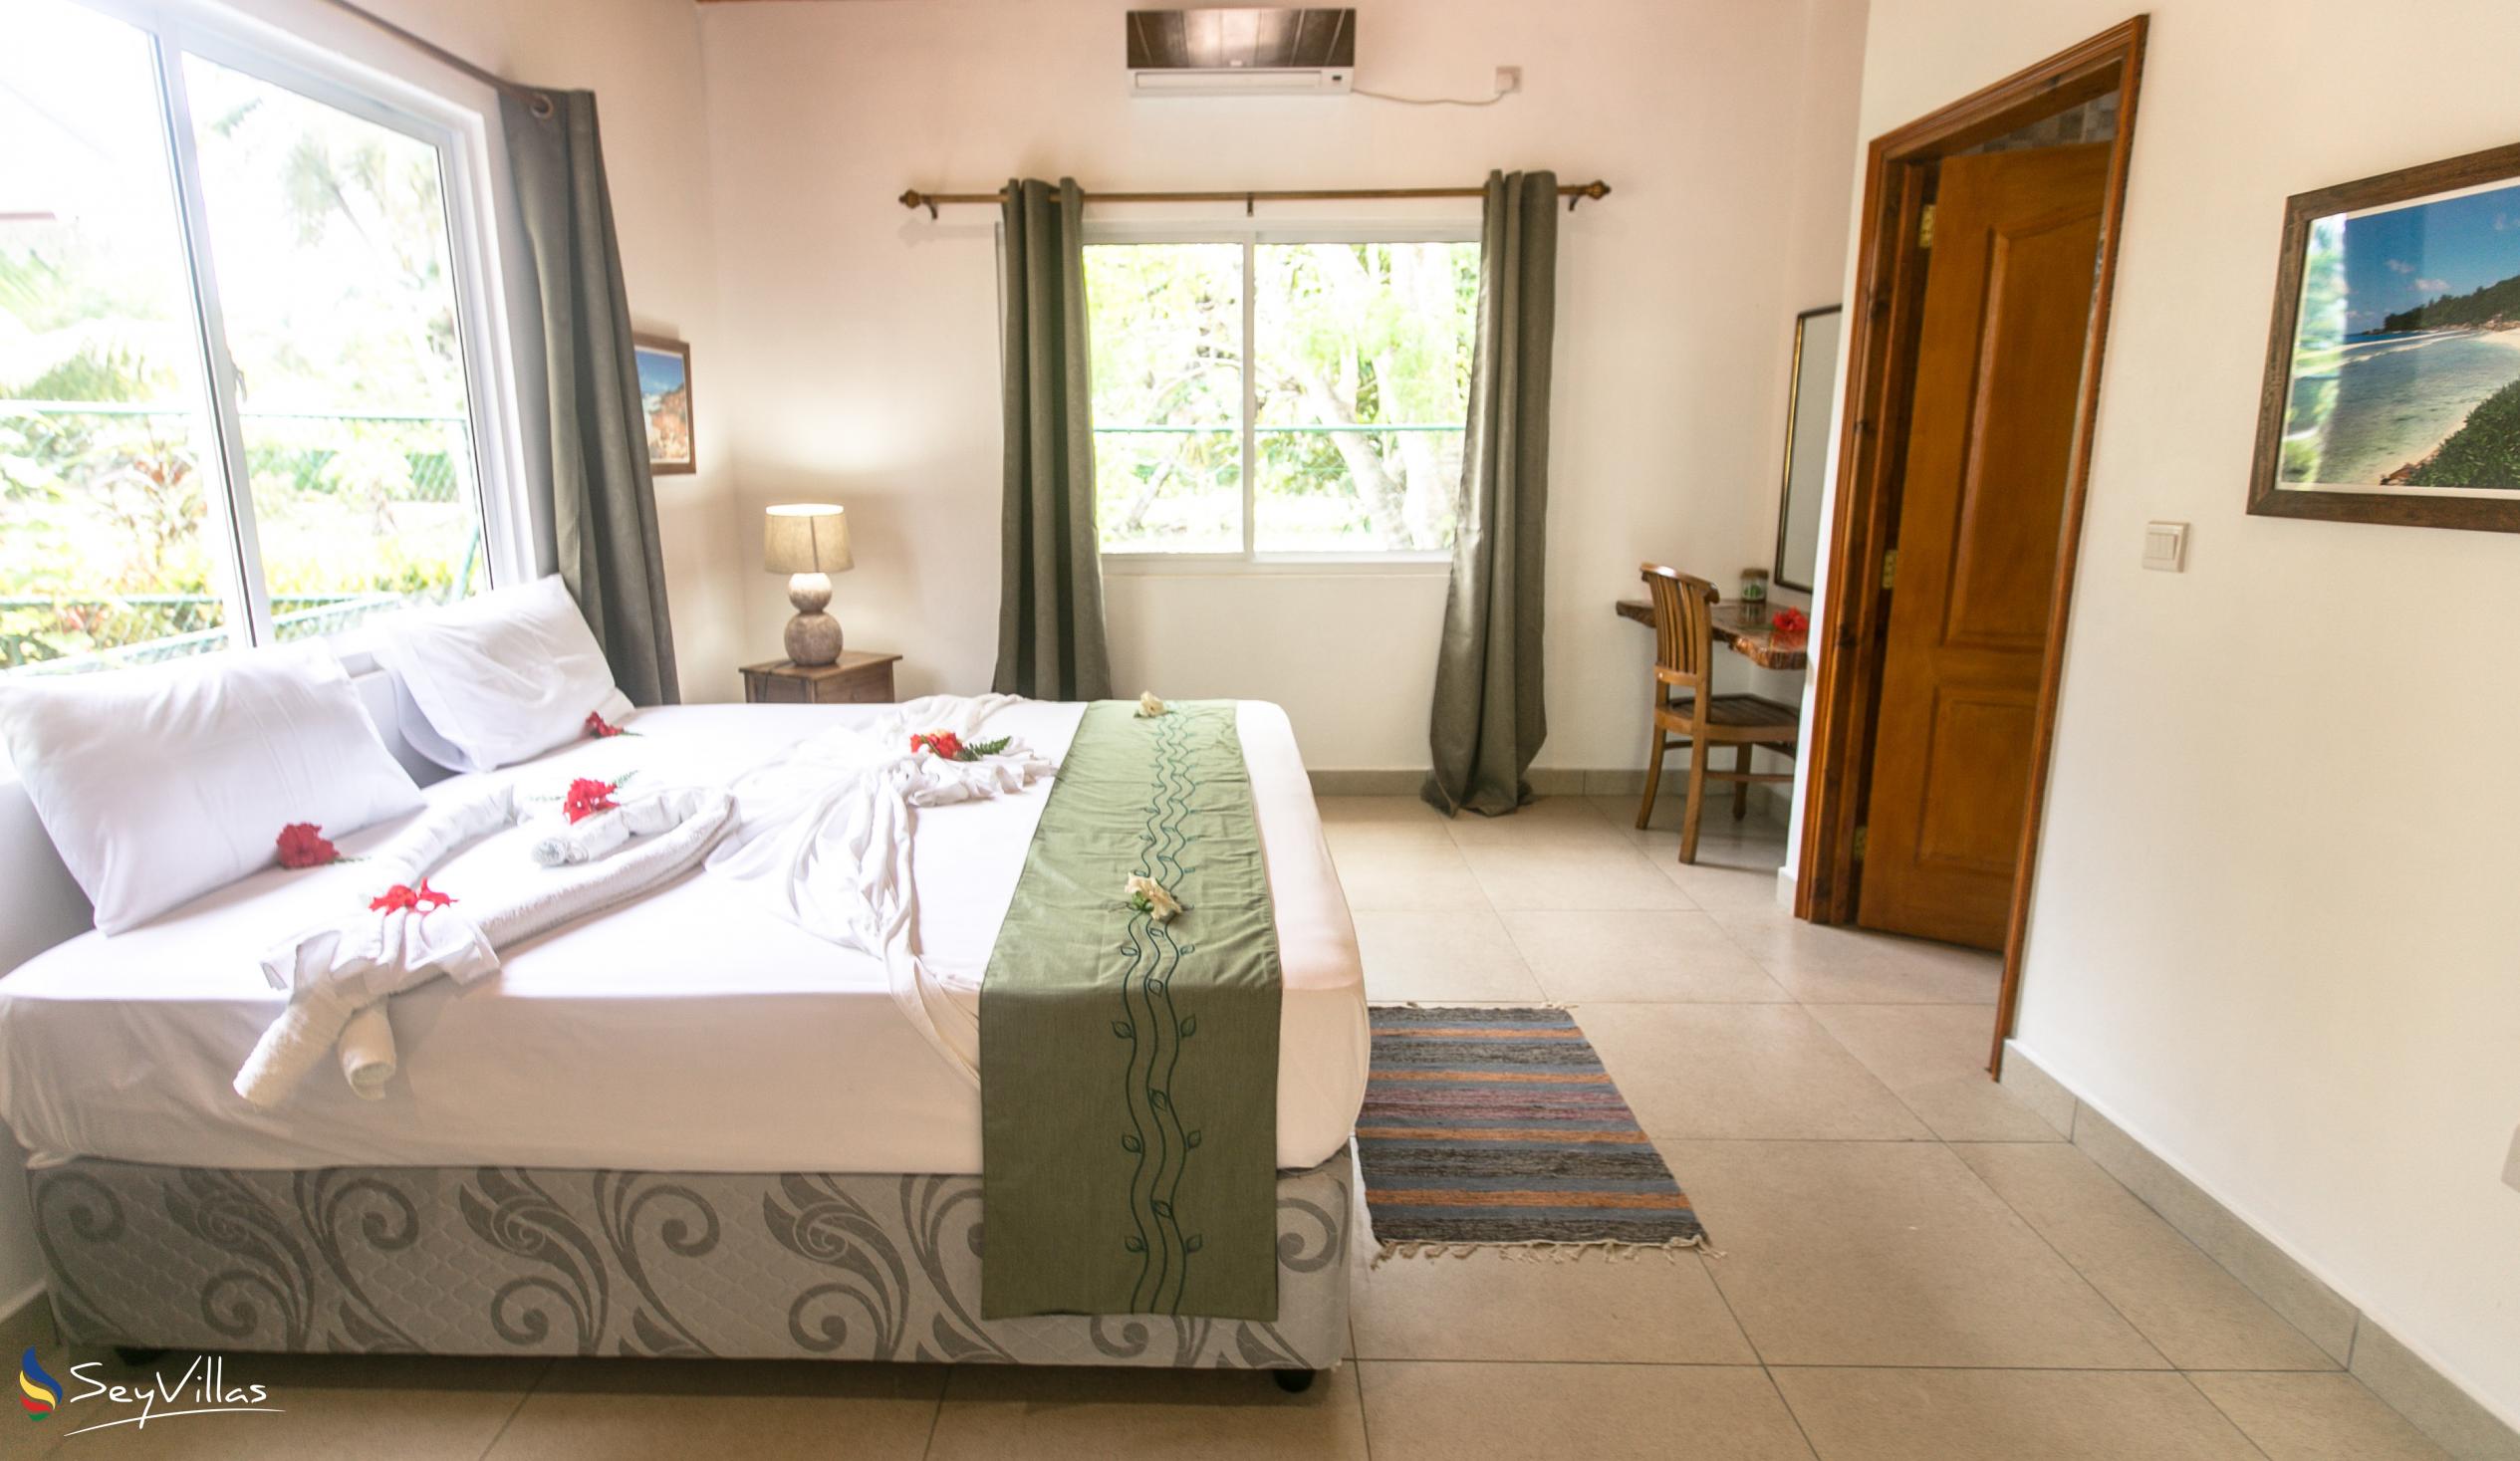 Photo 83: Pension Fidele - Koko ver & Koko rouz Apartments - La Digue (Seychelles)